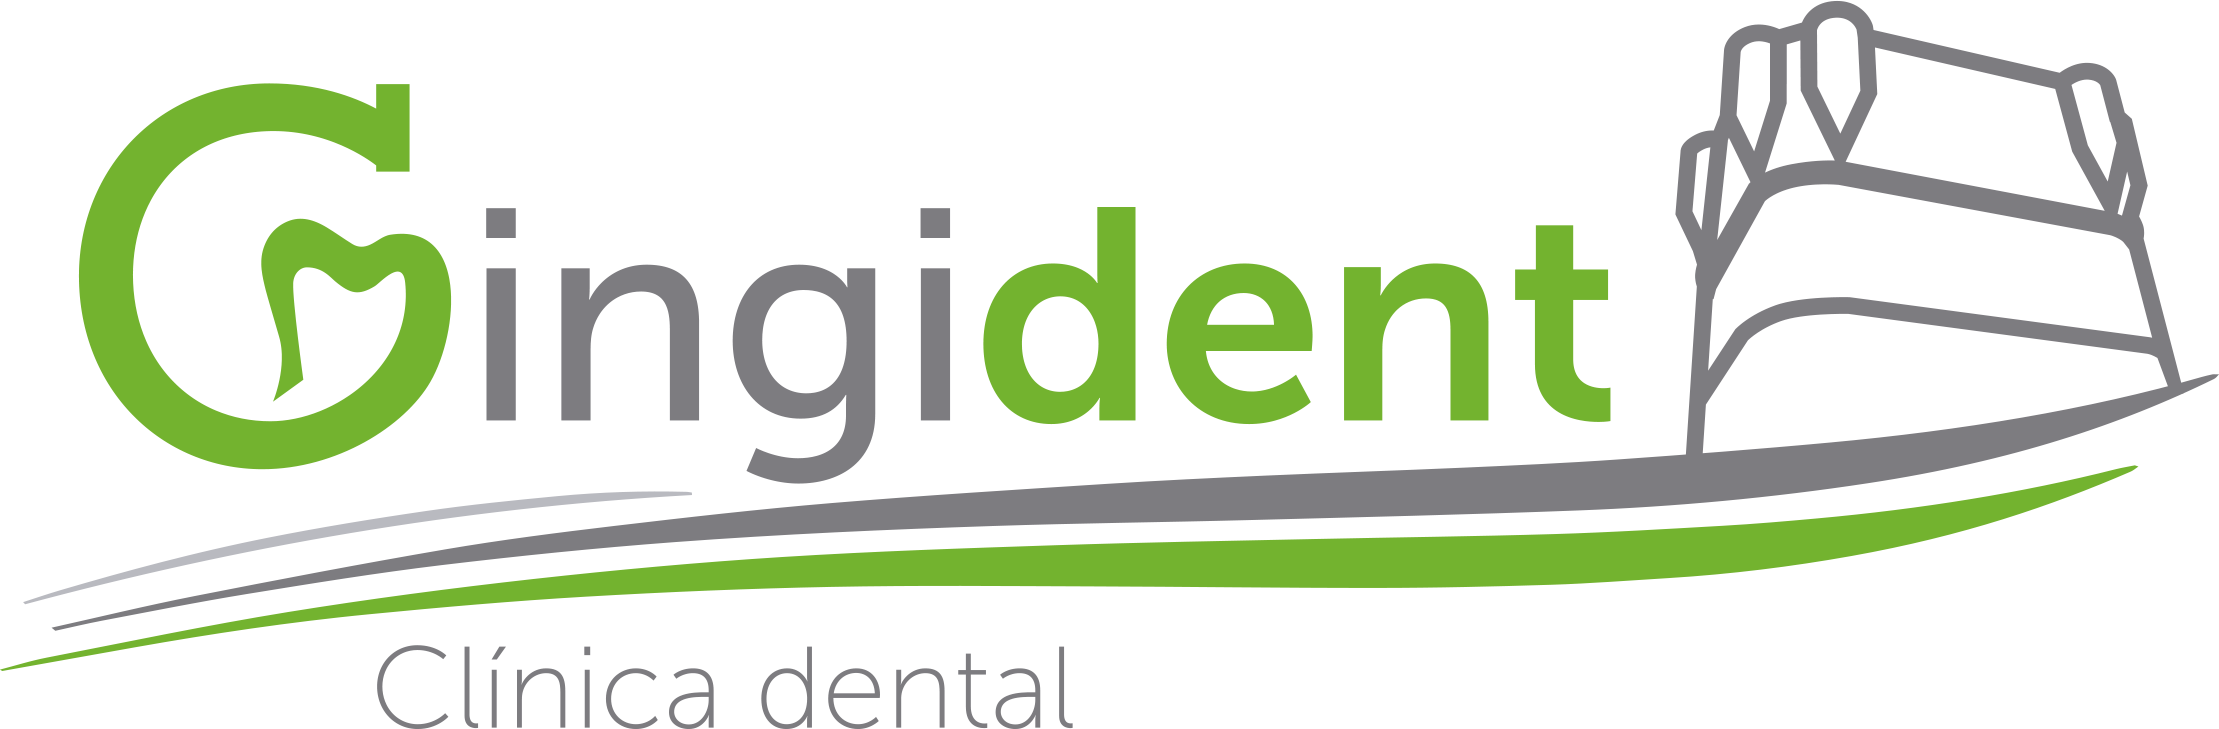 Clçinica dental Gingident